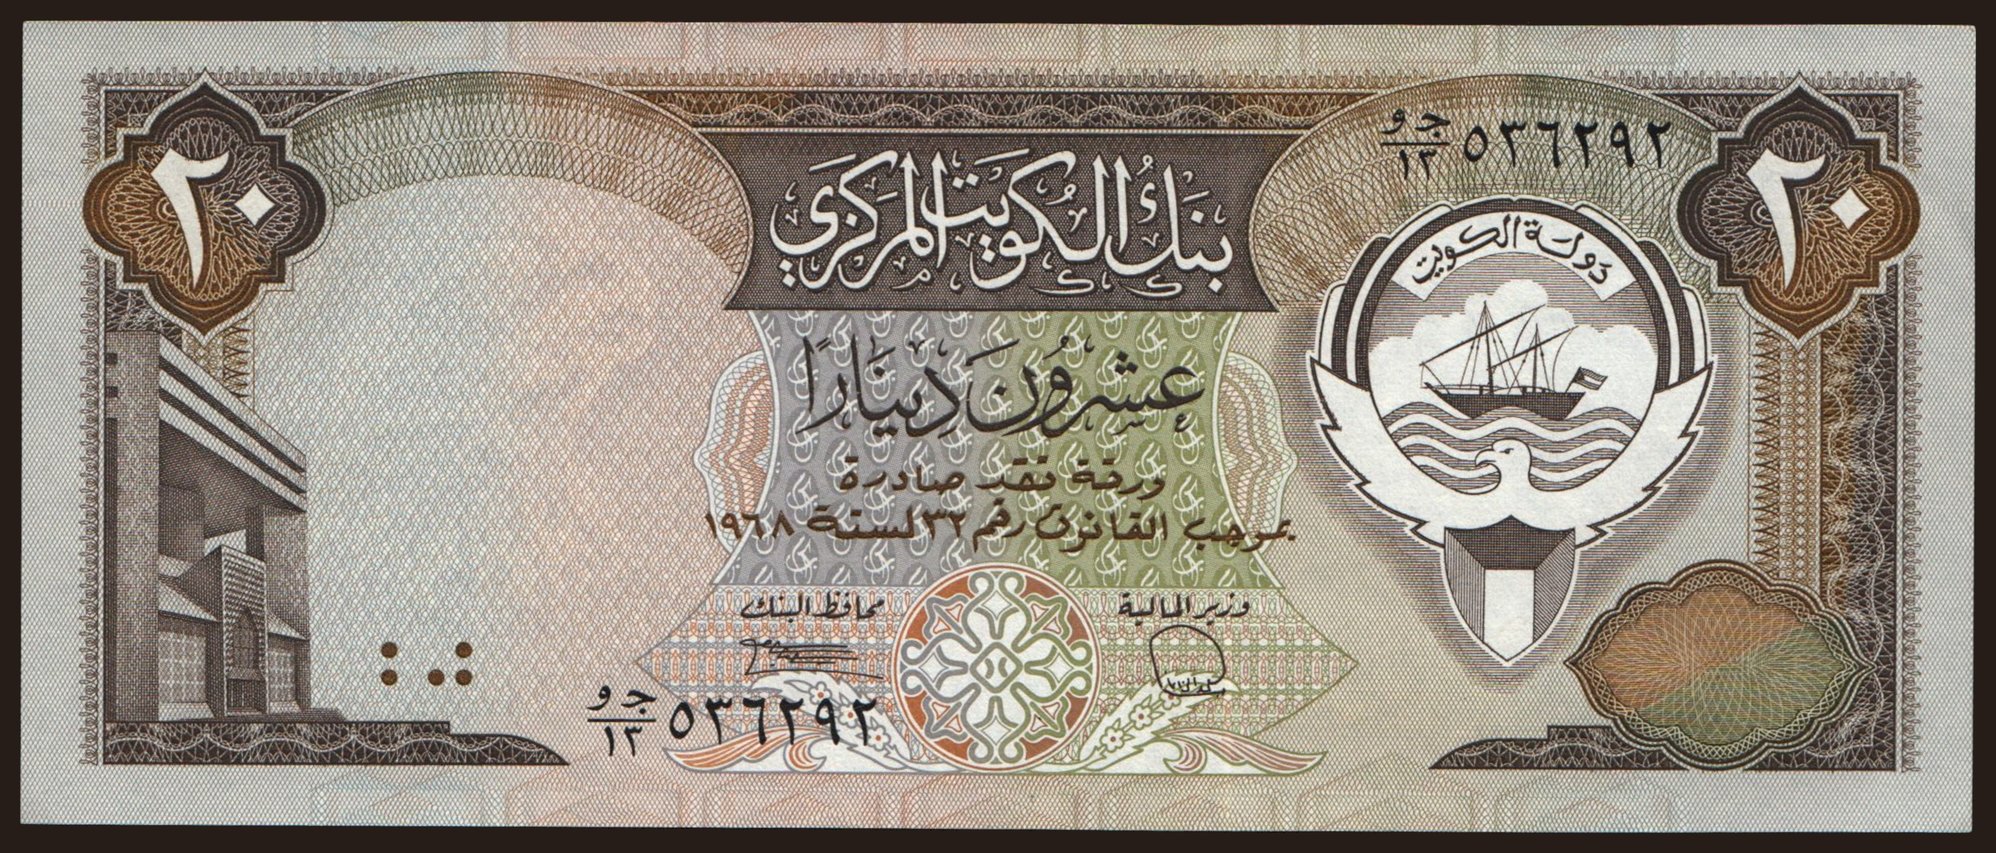 20 dinars, 1968(1992)